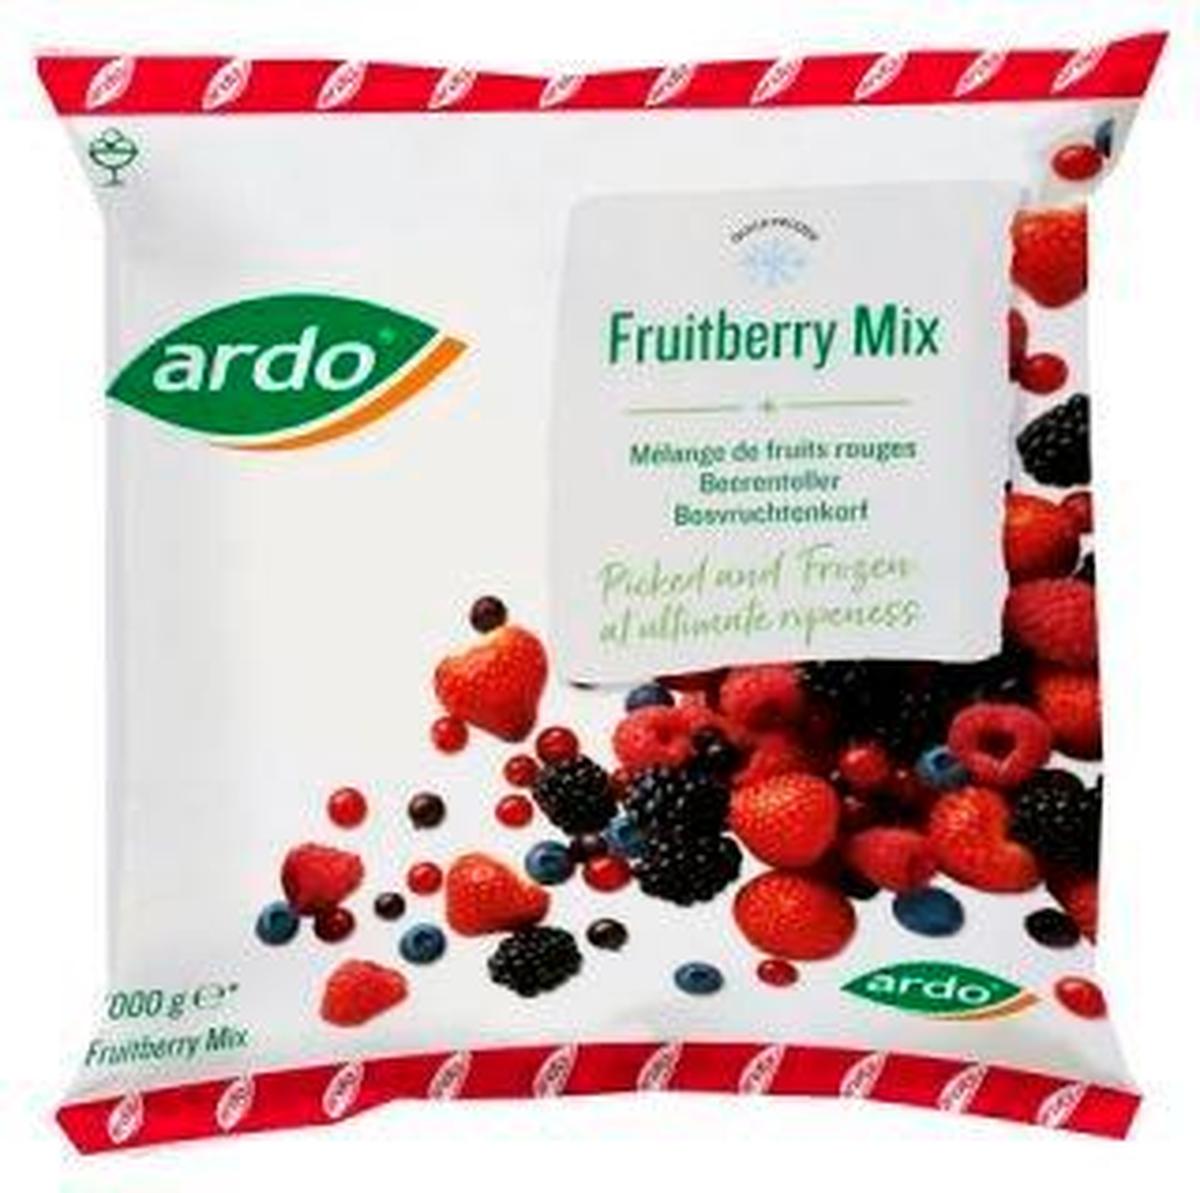 La mezcla de frutas congeladas ‘Fruitberry Mix’